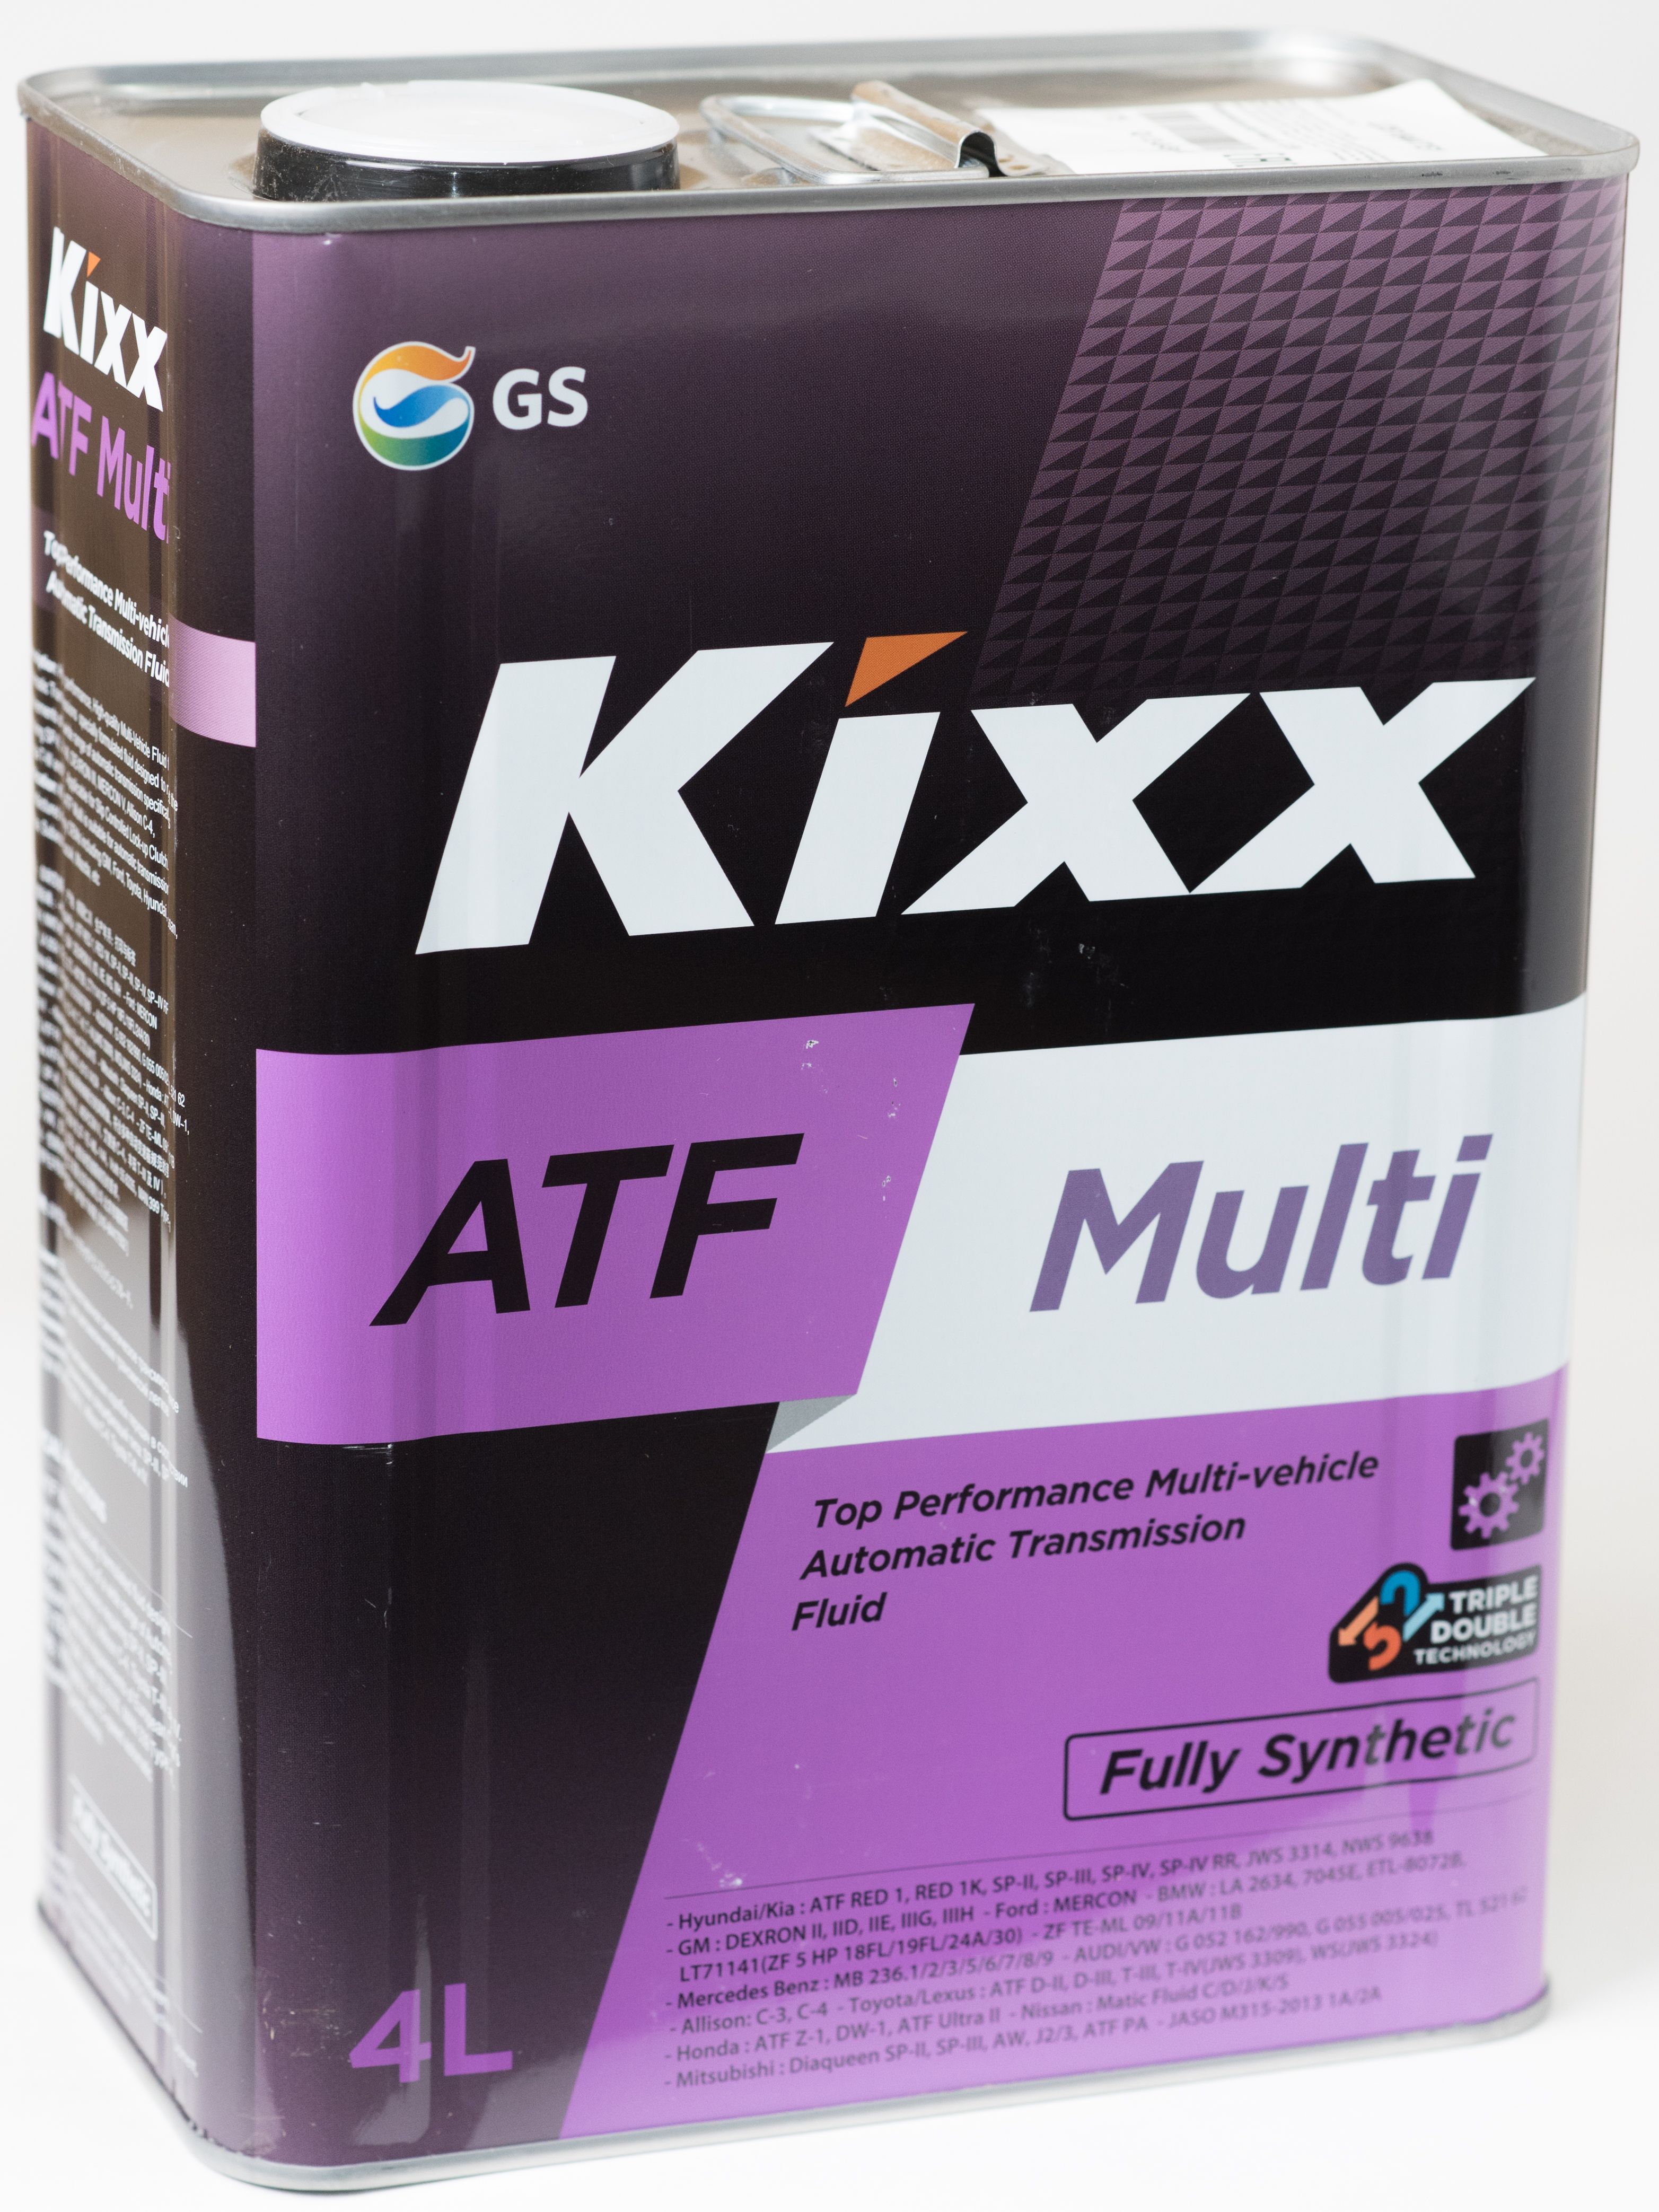 Multi atf допуски. Kixx ATF Multi 4л. Kixx ATF 4. L251844te1 Kixx ATF Multi 4l. Kixx ATF Multi 4edex3sp4.